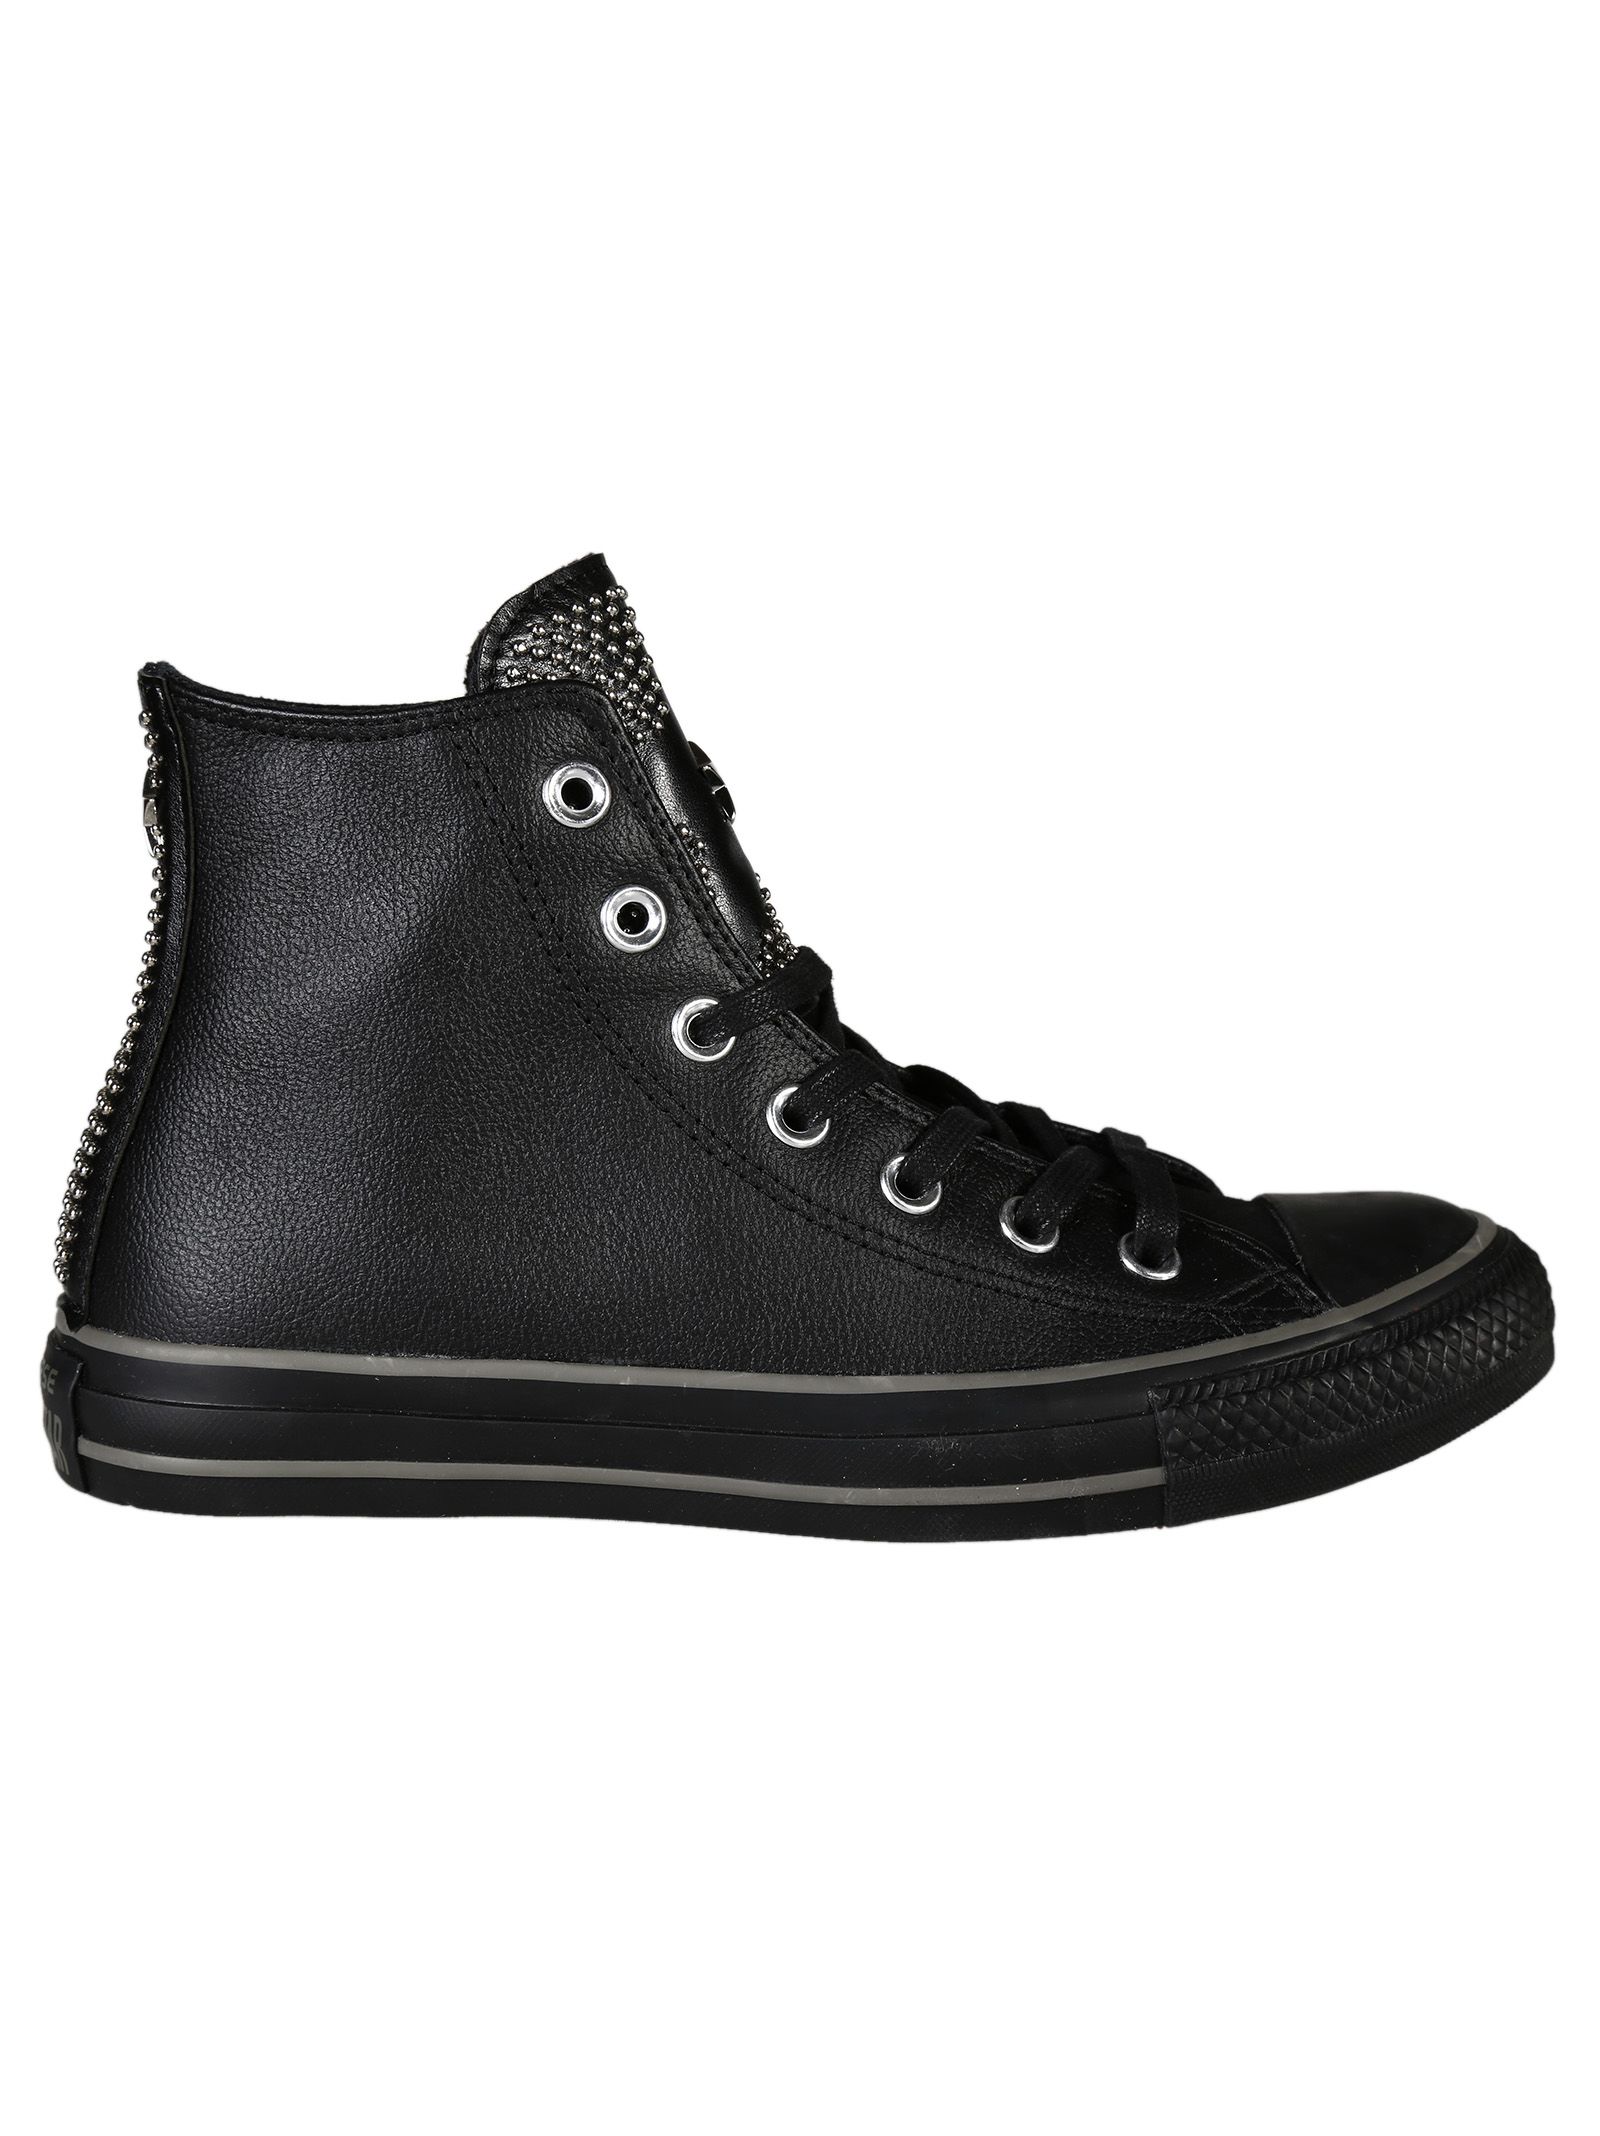 Converse - Converse All Star Hi Leather LTD - Black Studs, Women's ...